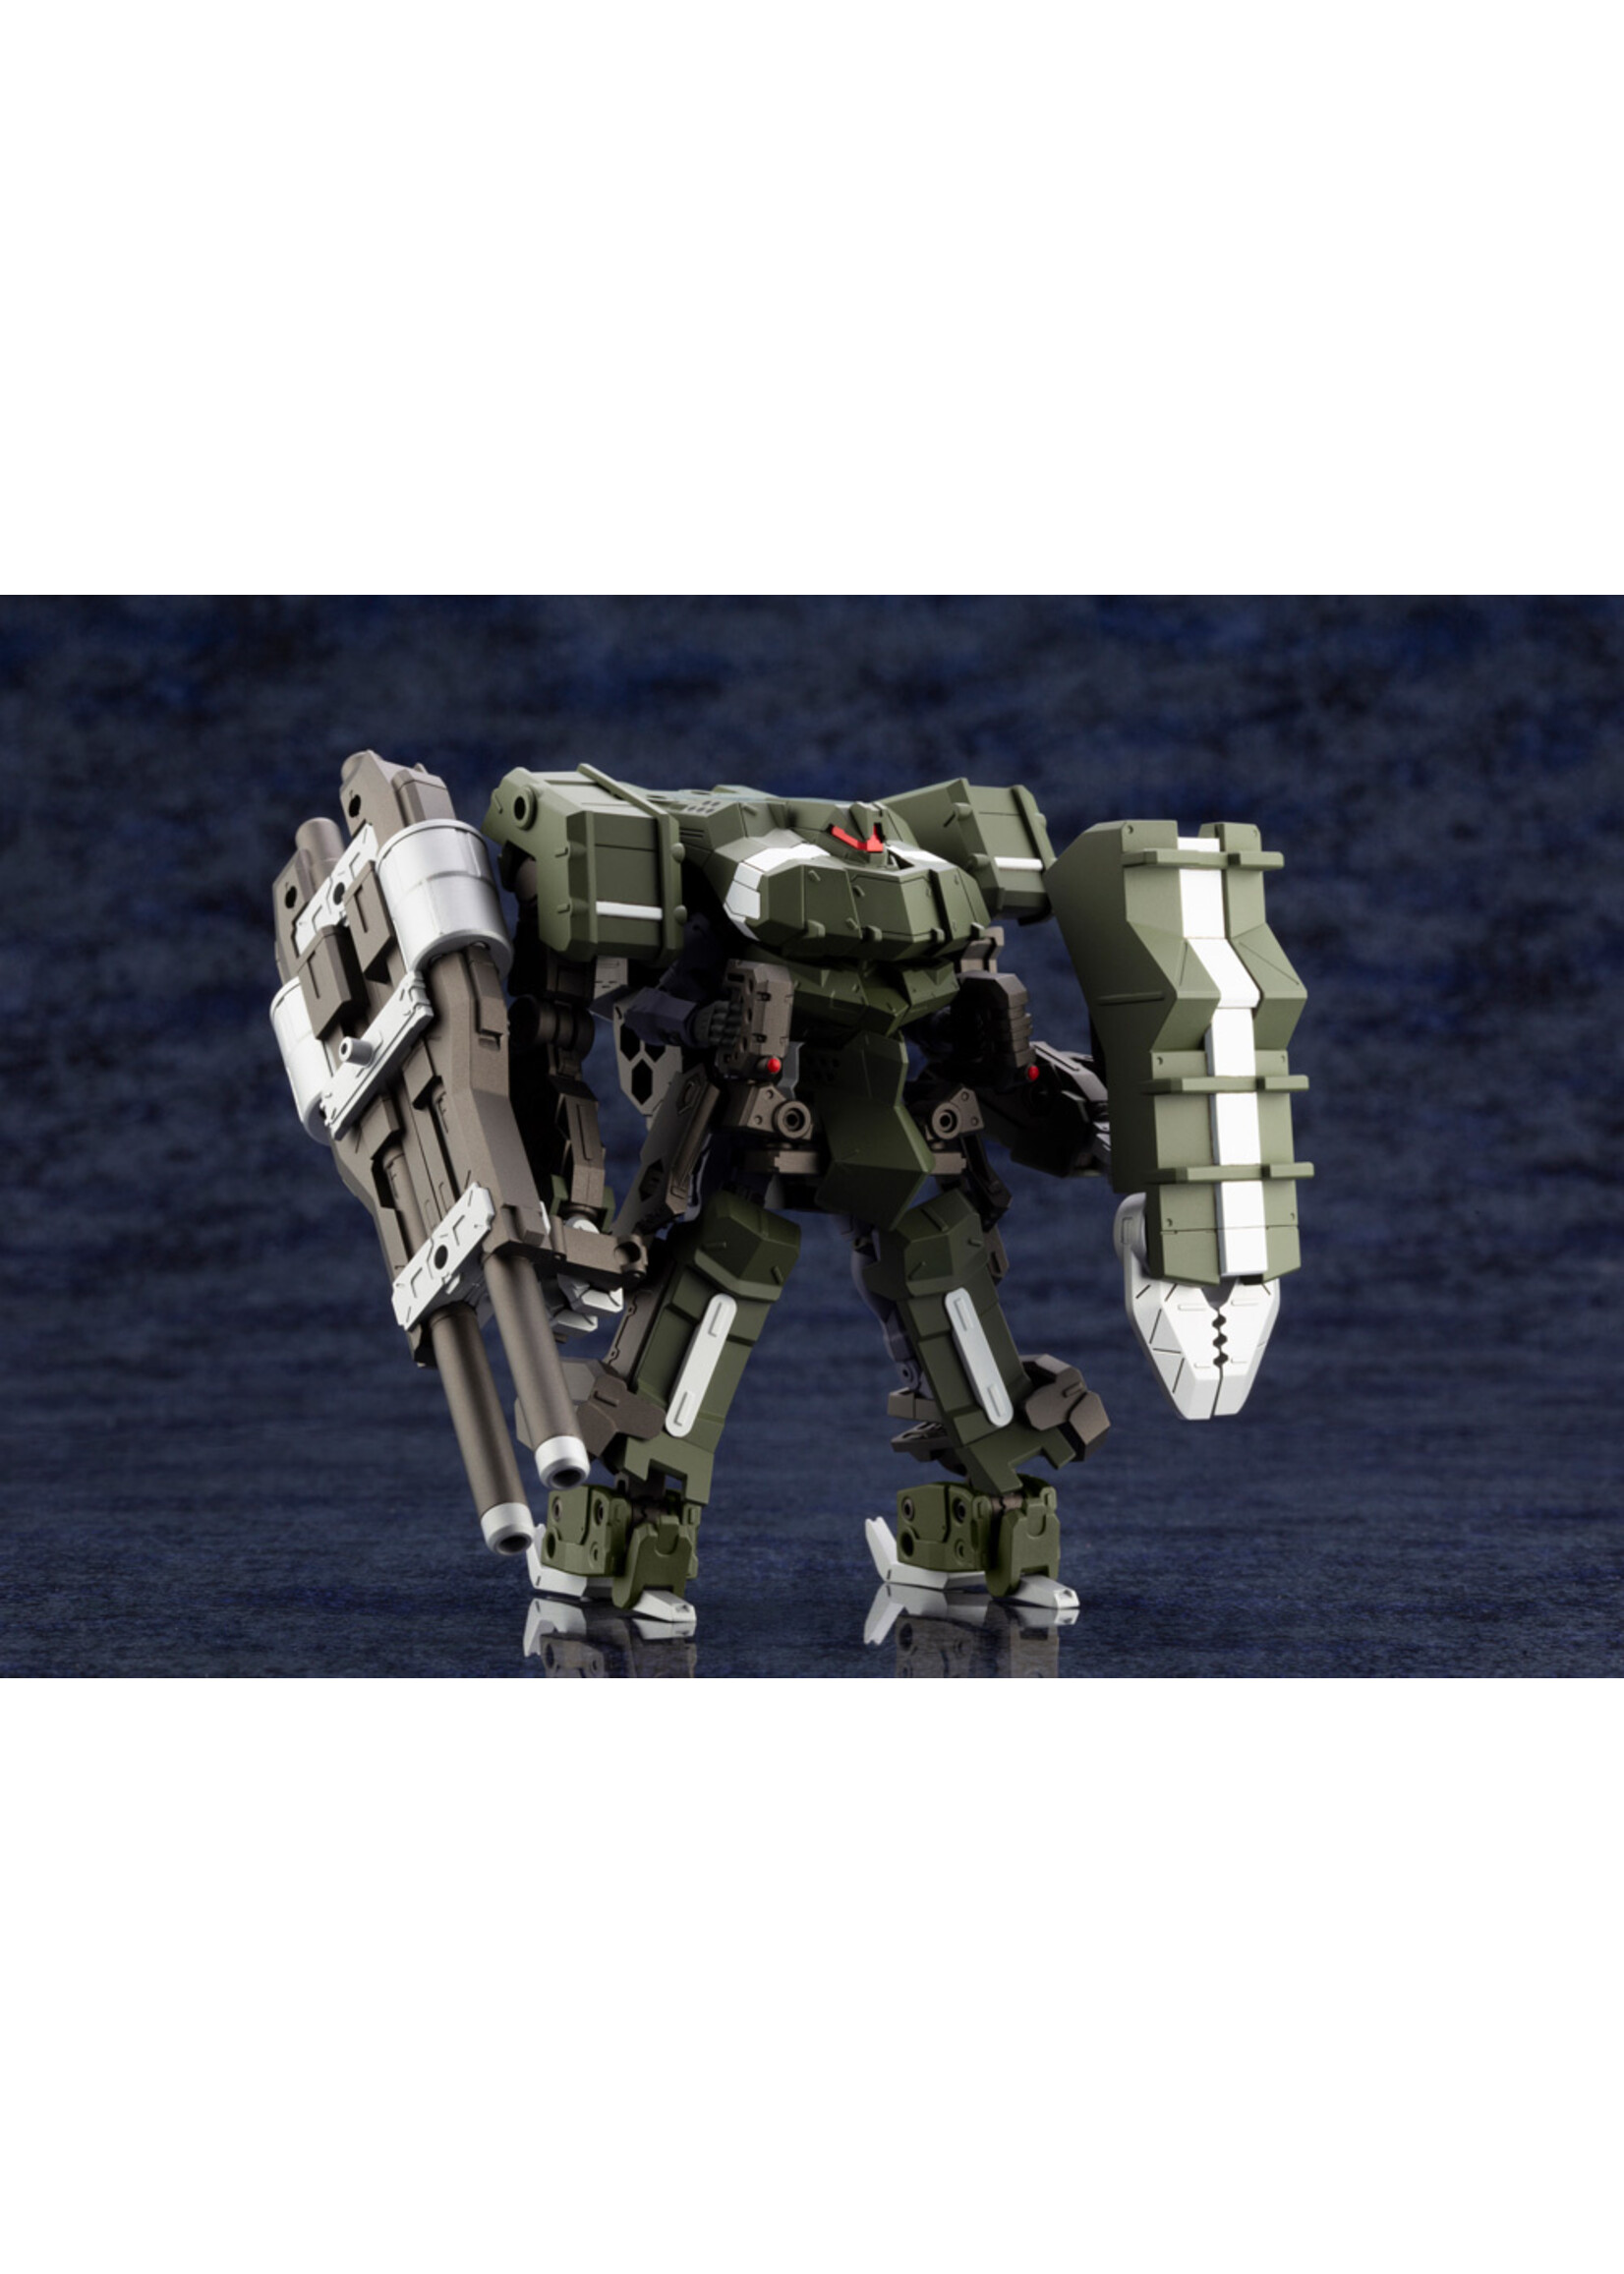 Kotobukiya HG068 - Hexa Gear Definition Armor "Blazeboar"